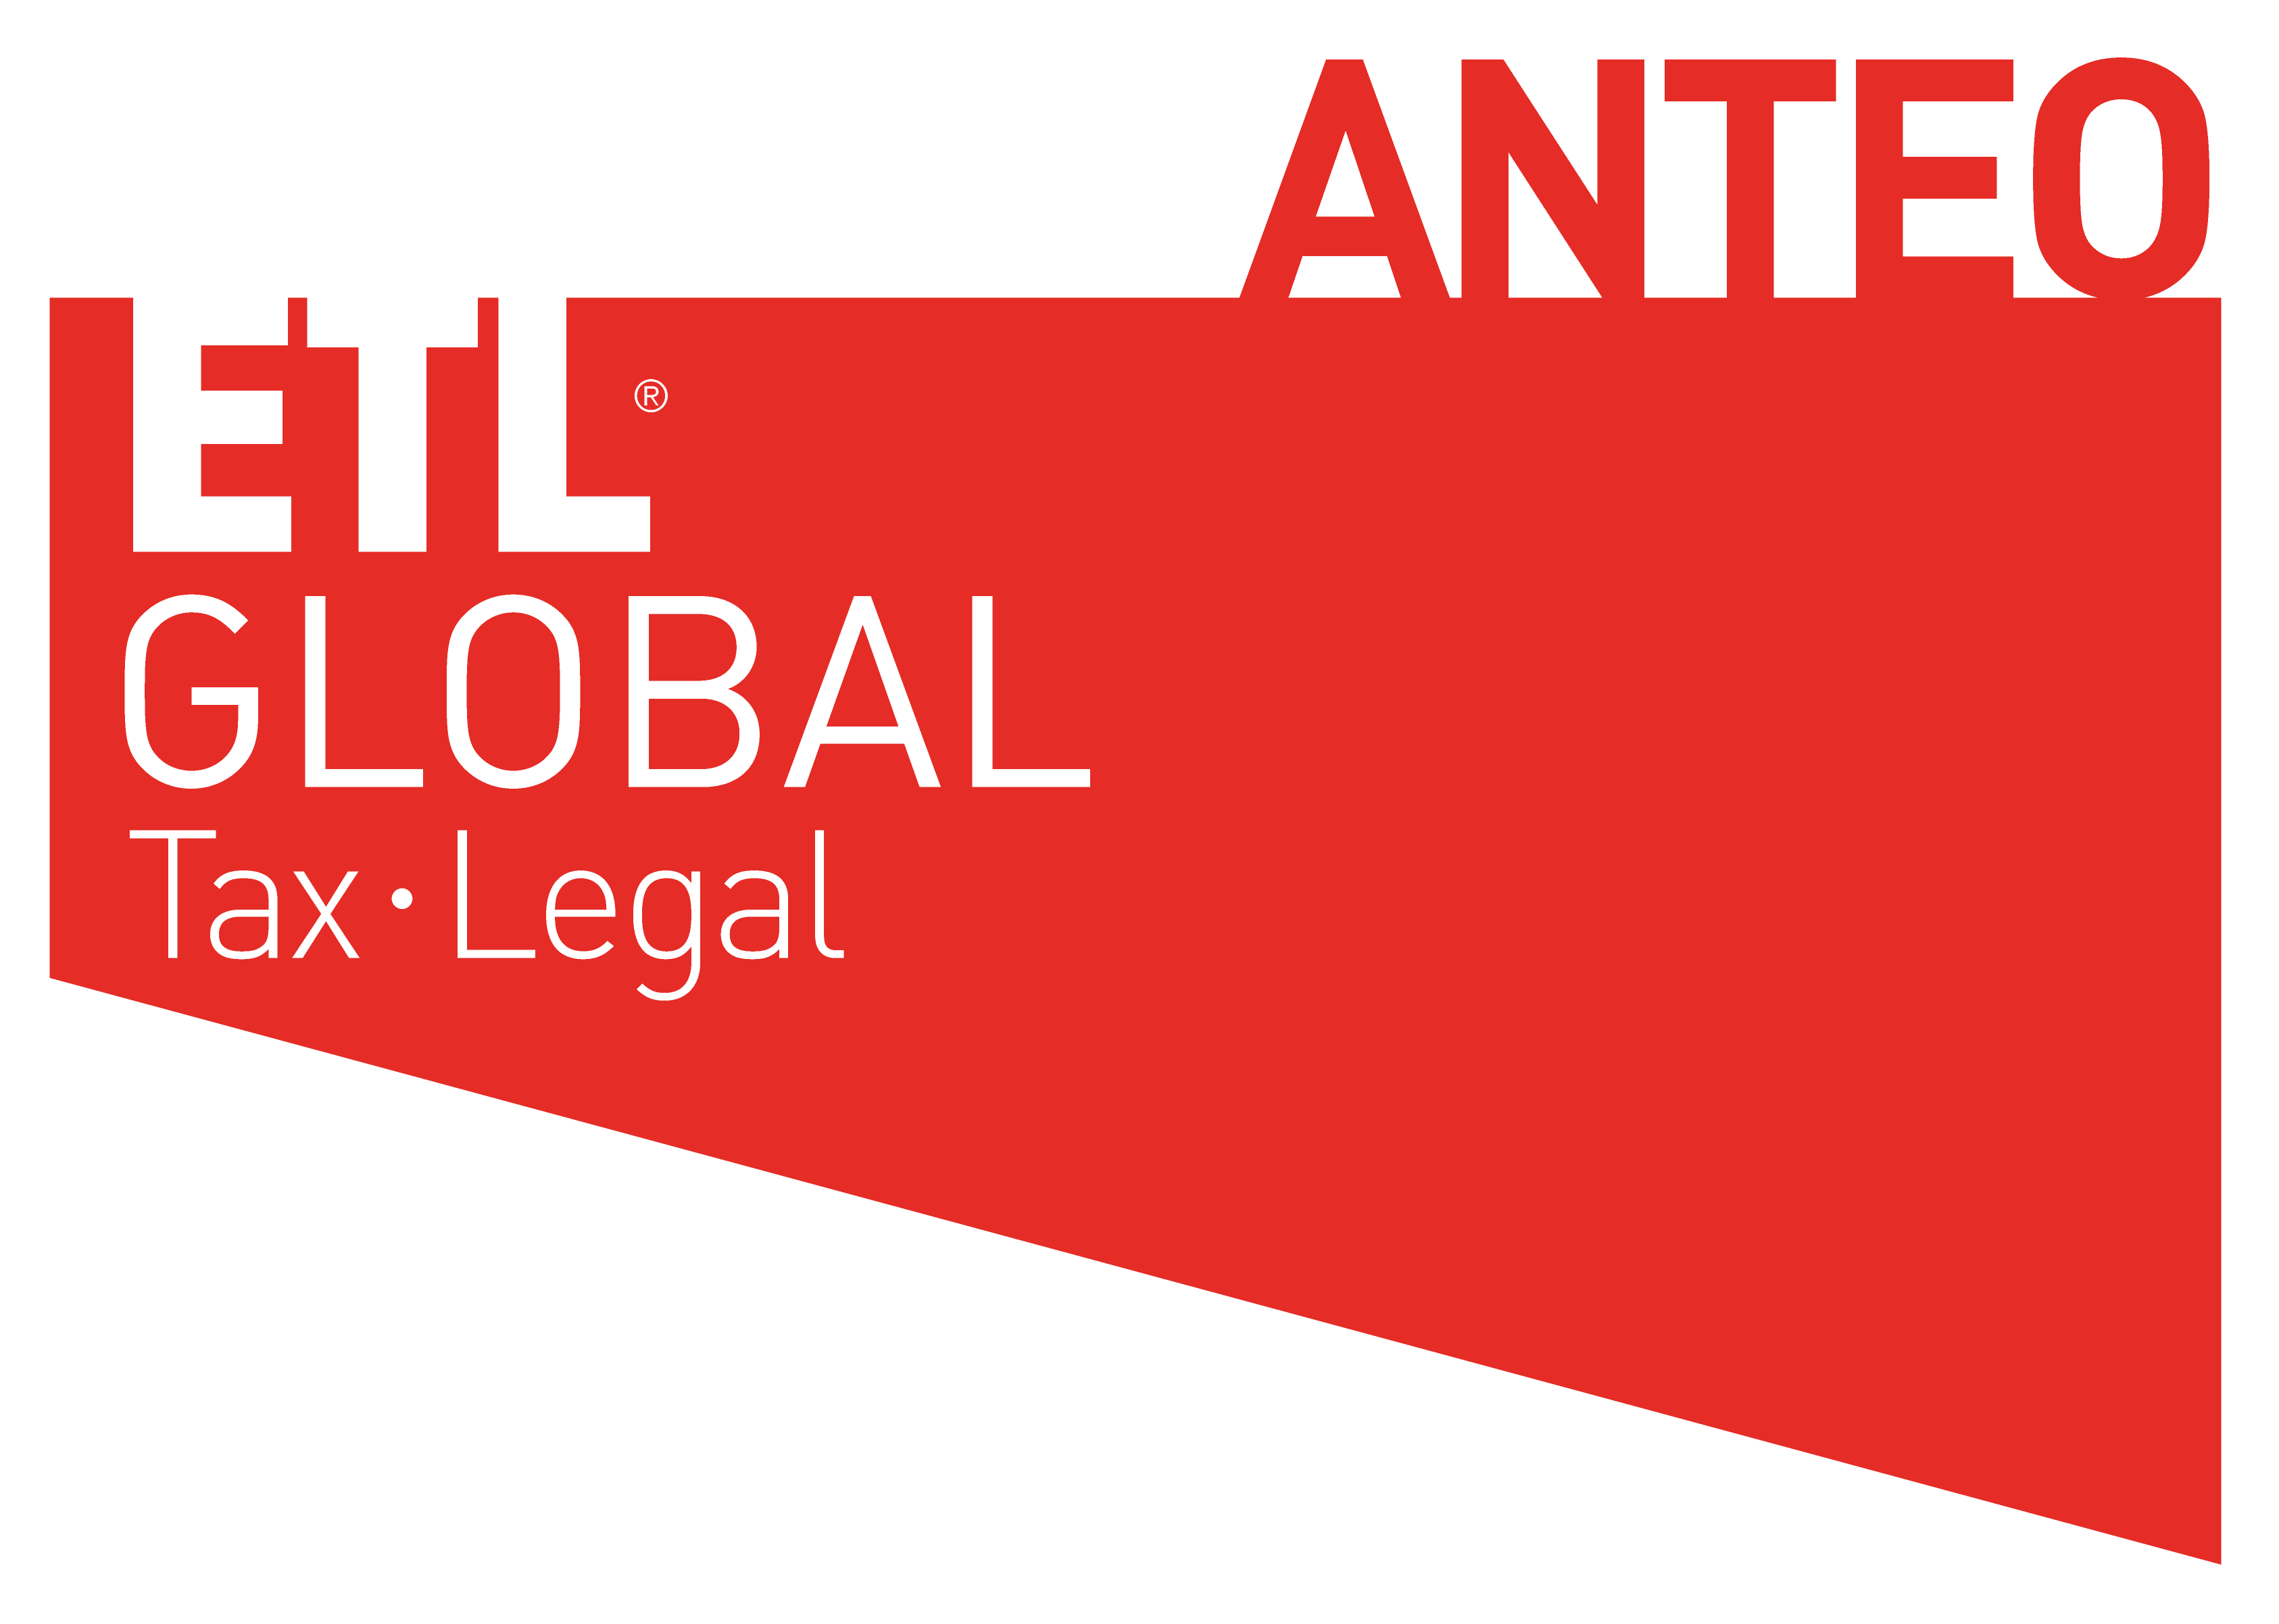 Anteo - ETL GLOBAL